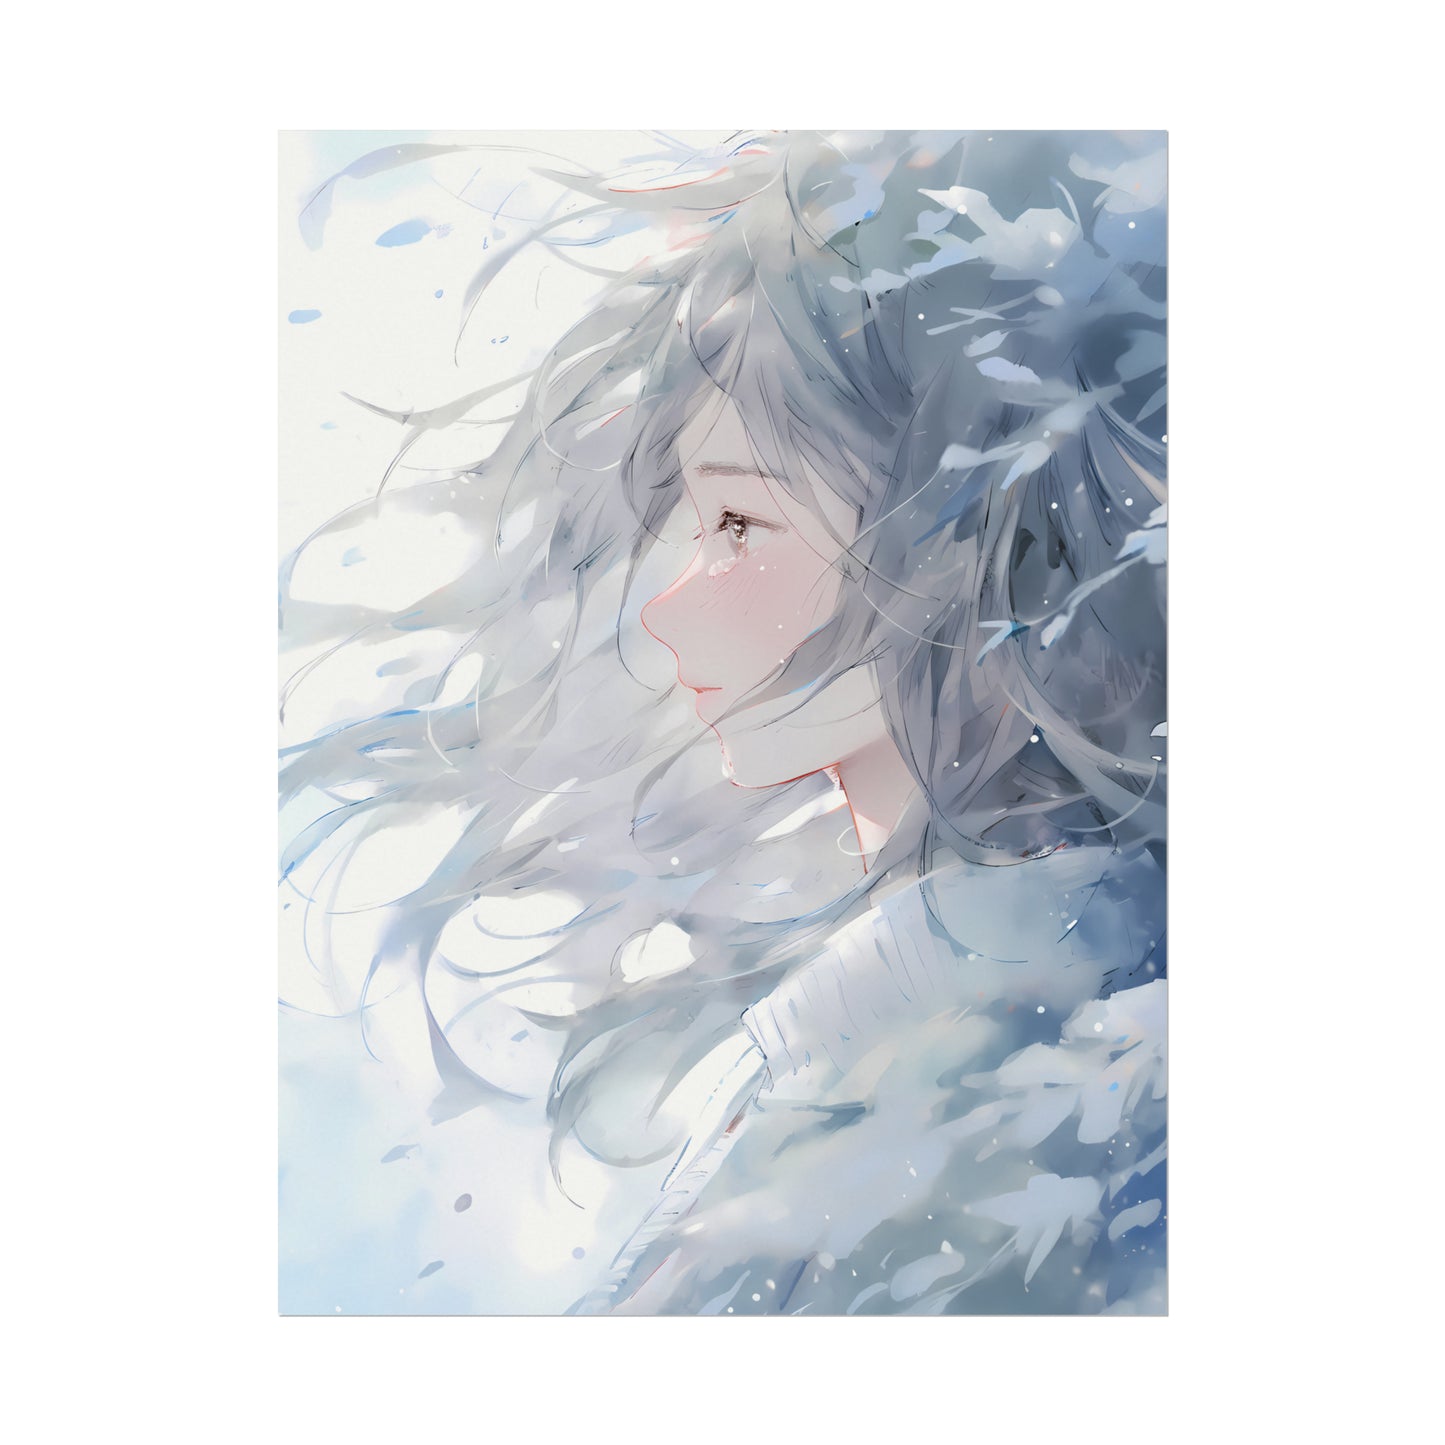 Fade Into Winter - Anime Watercolor Poster